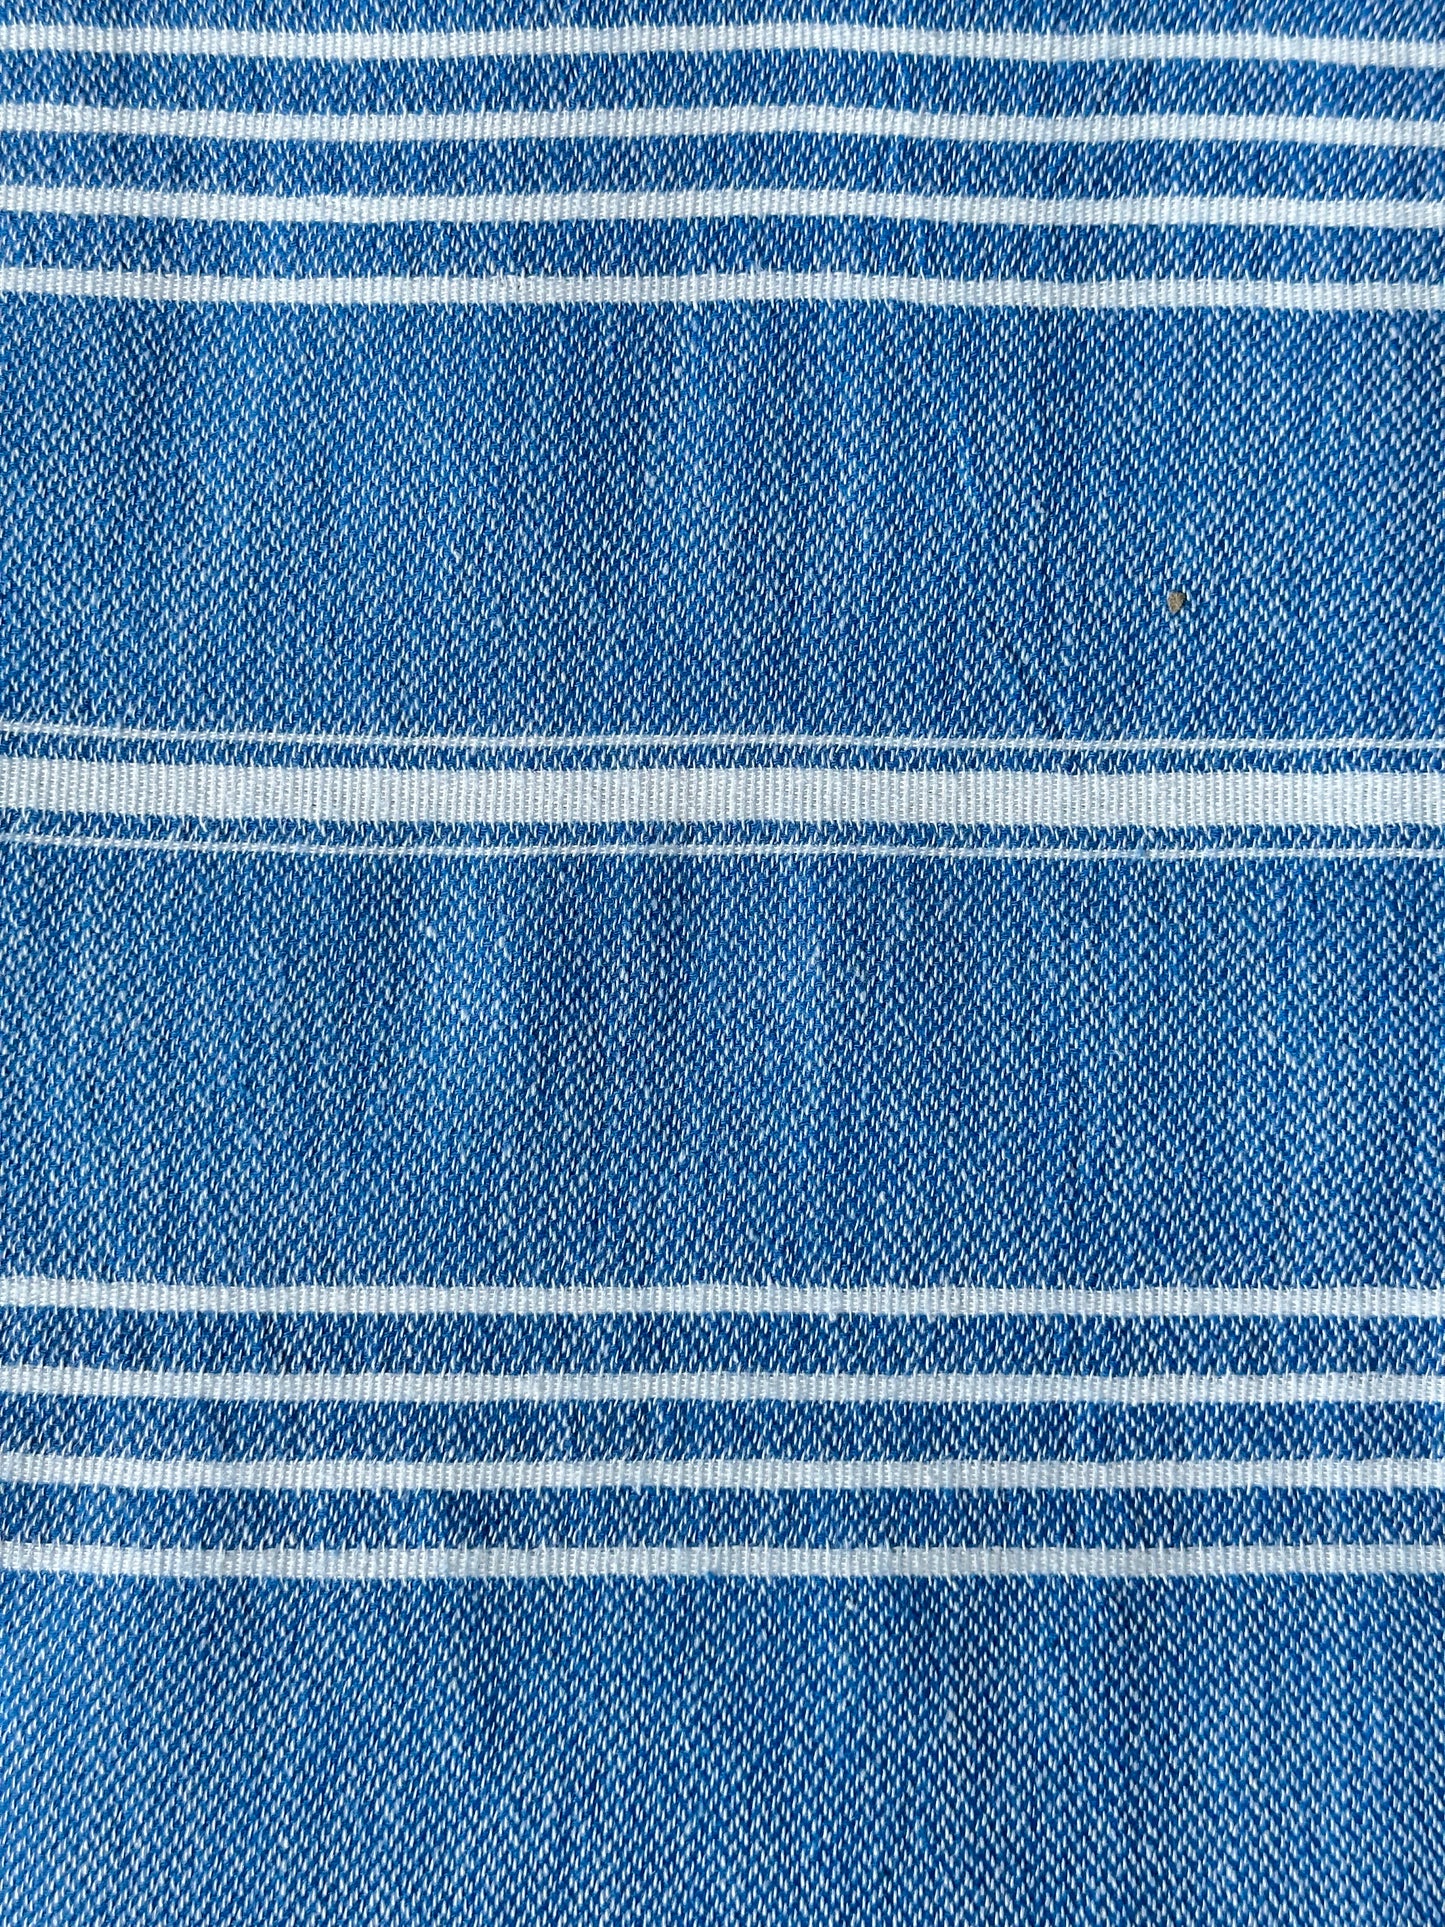 Classic Design Beach Towel